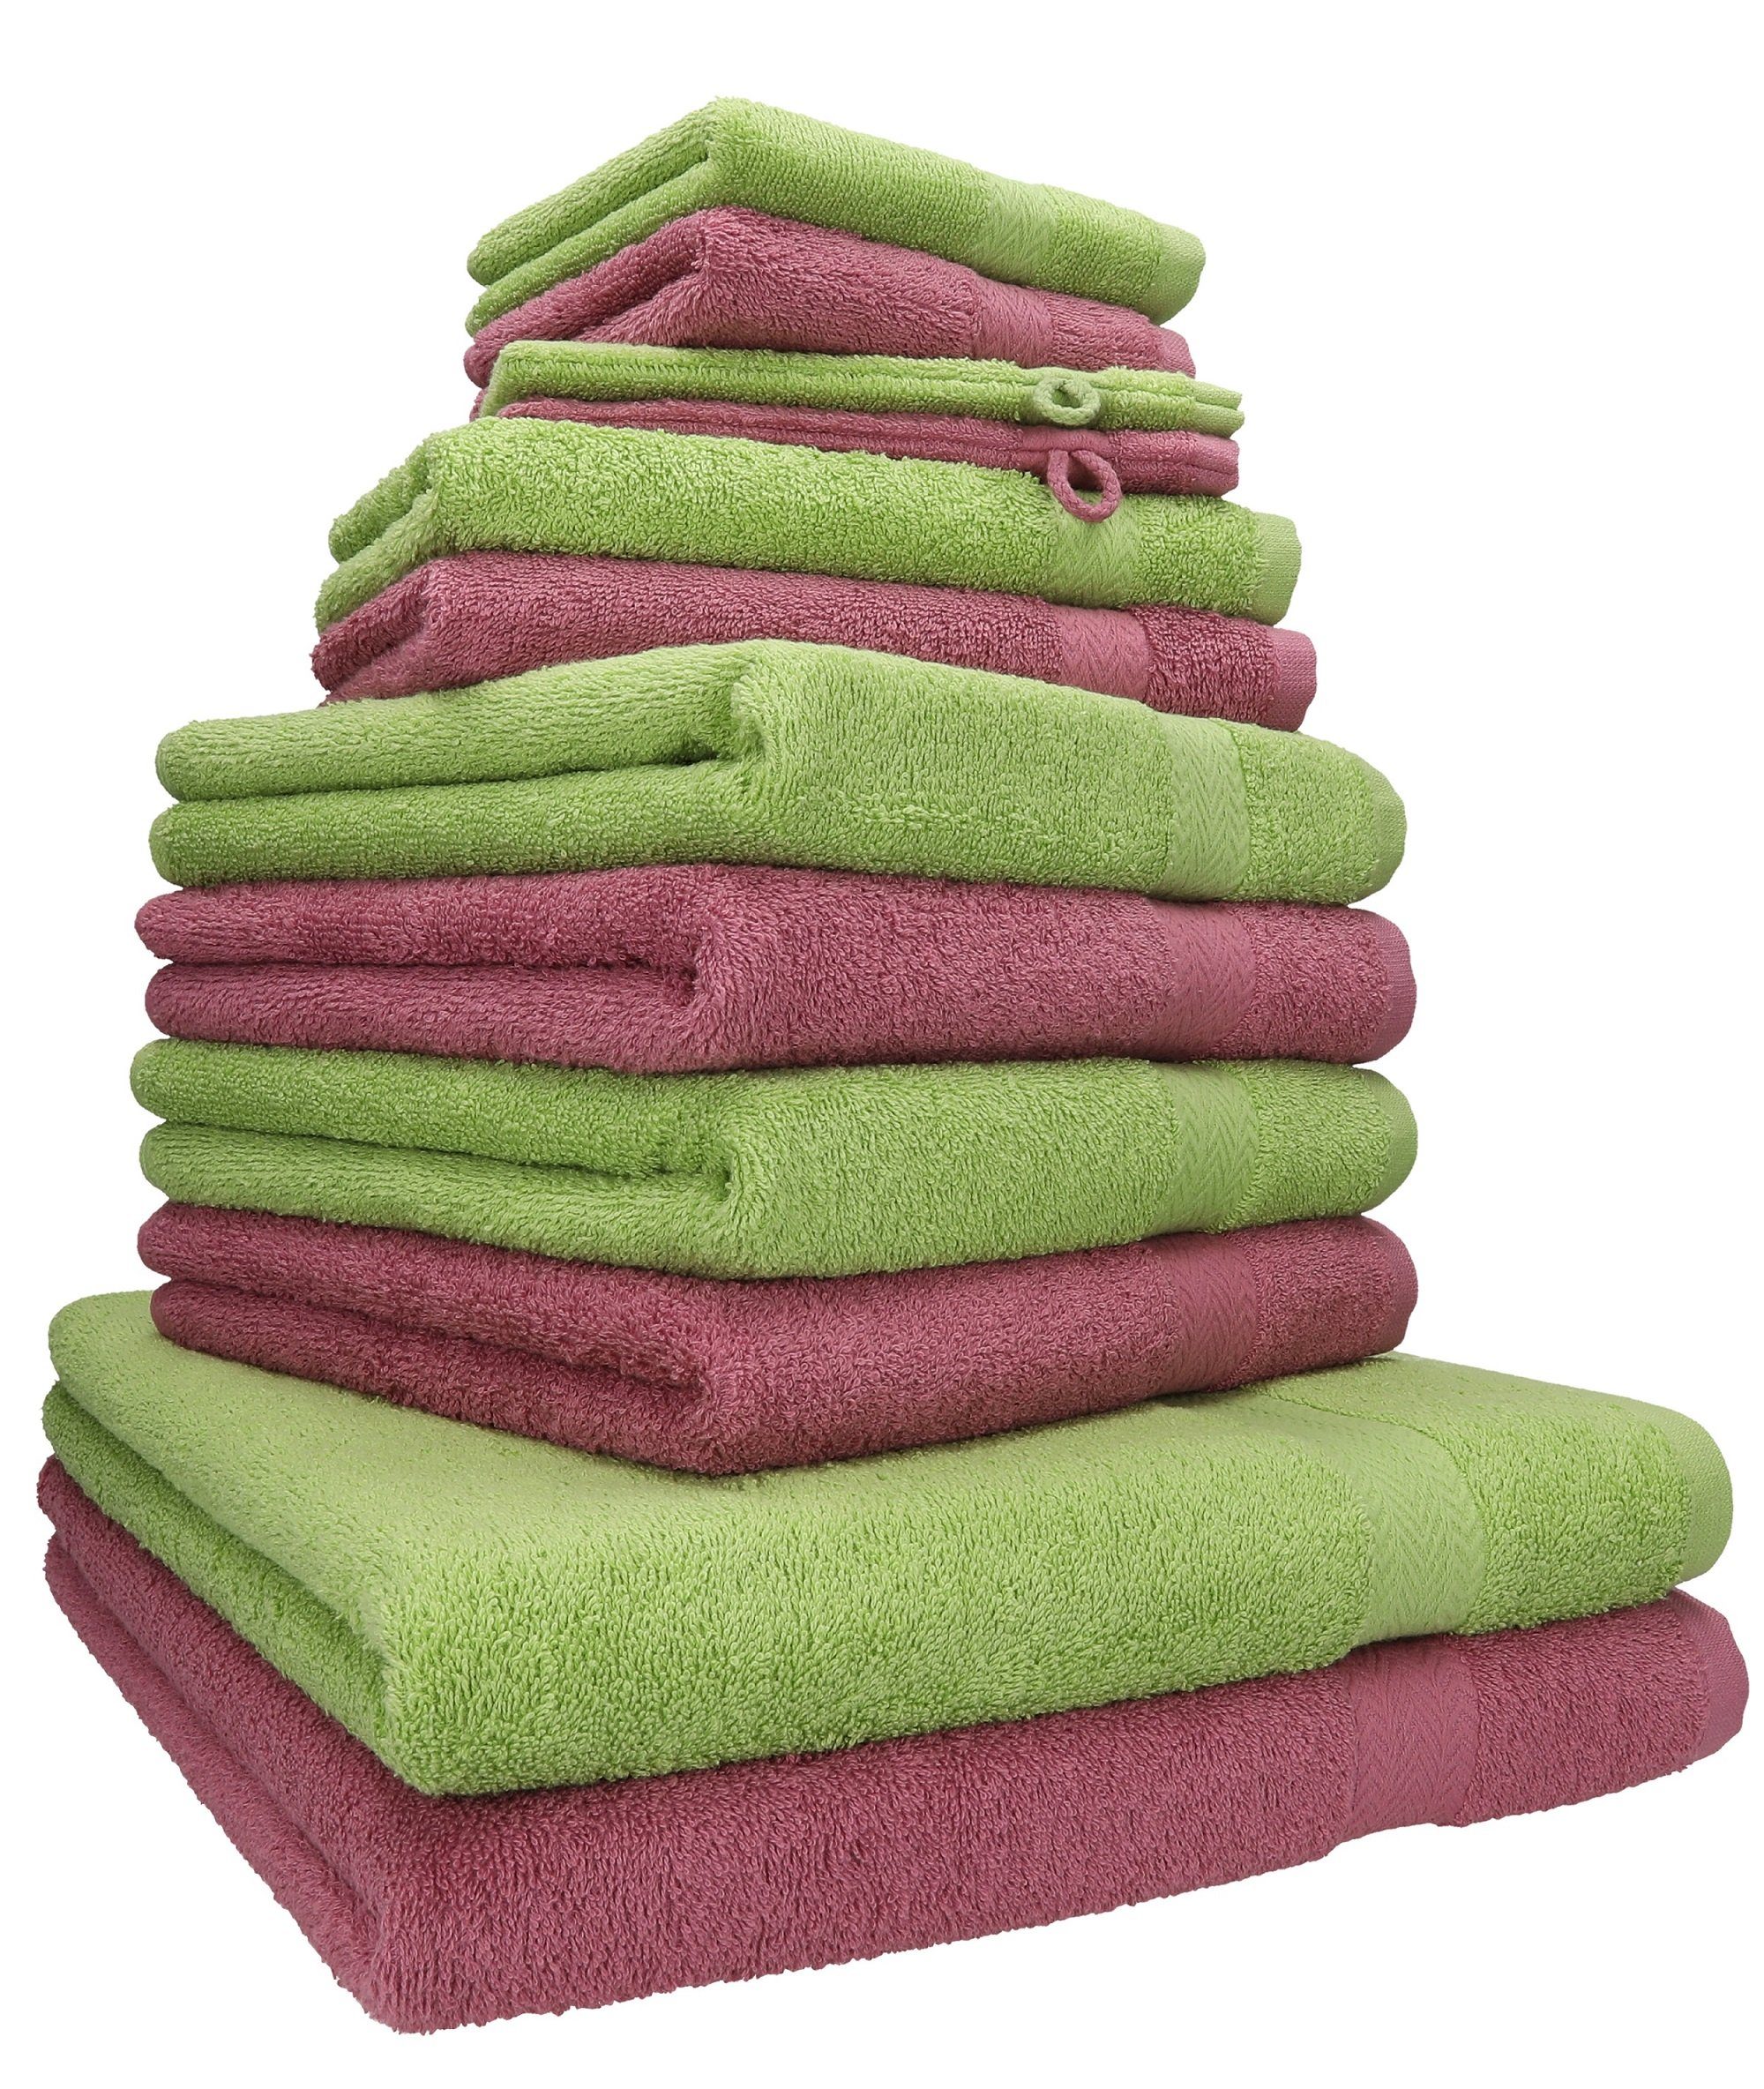 Betz Handtuch Set »12-TLG. Handtuch Set Premium 100% Baumwolle 2  Duschtücher 4 Handtücher 2 Gästetücher 2 Seiftücher 2 Waschhandschuhe Farbe  Beere/avocadogrün Marke: Betz« (12-tlg) online kaufen | OTTO